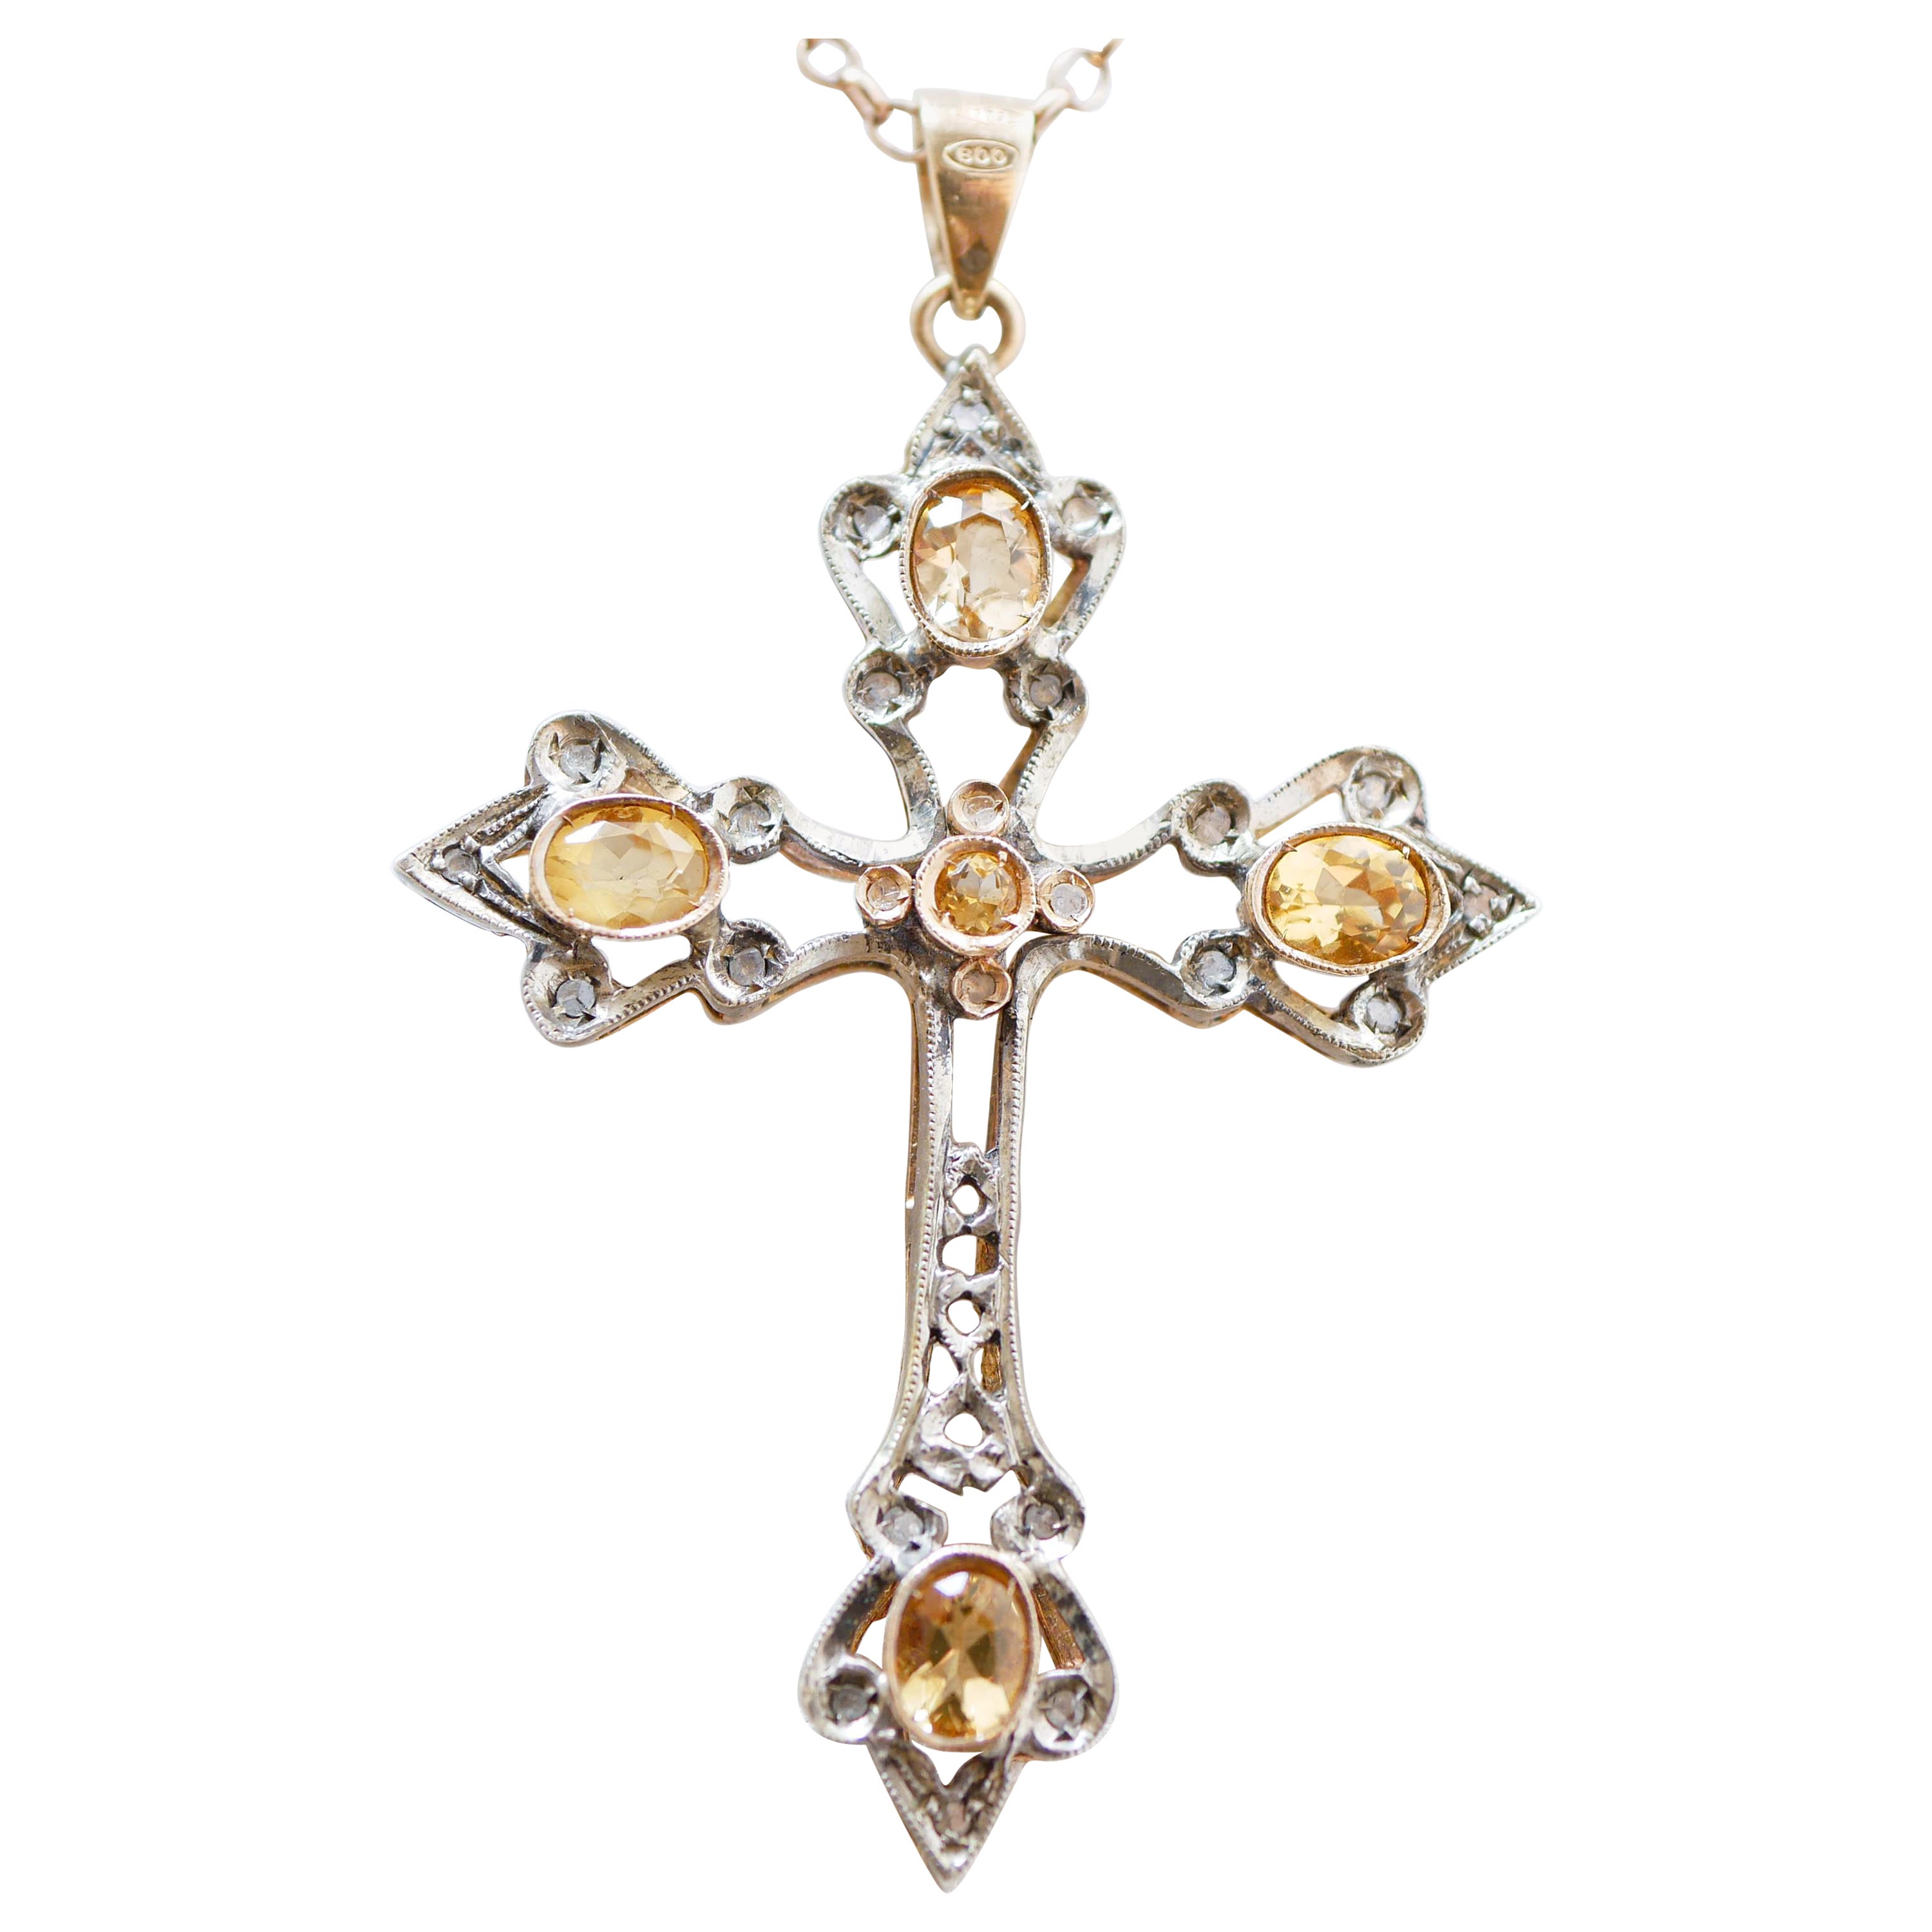 Topazs, Diamonds, 14 Karat Rose Gold and Silver Cross Pendant Necklace. For Sale